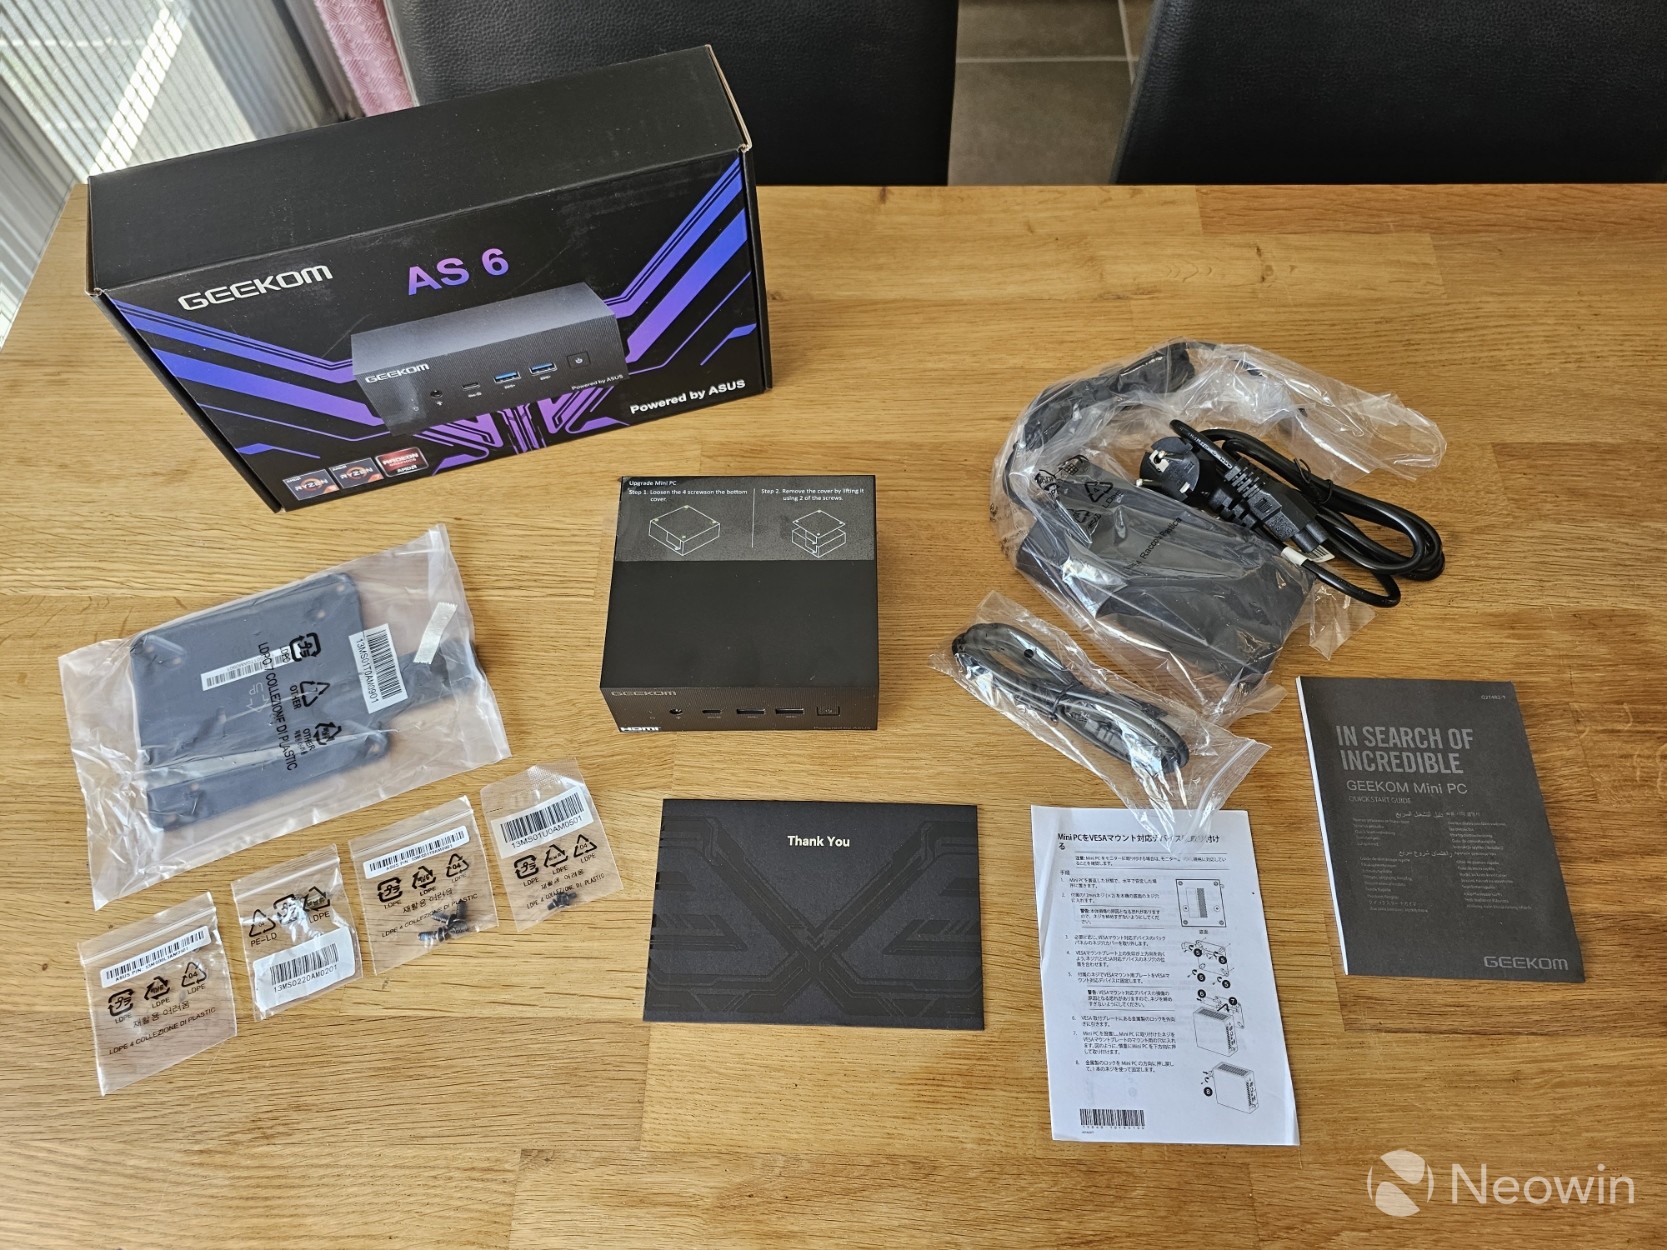 Geekom AS 6 Review an AMD Ryzen 9 Powered Mini PC